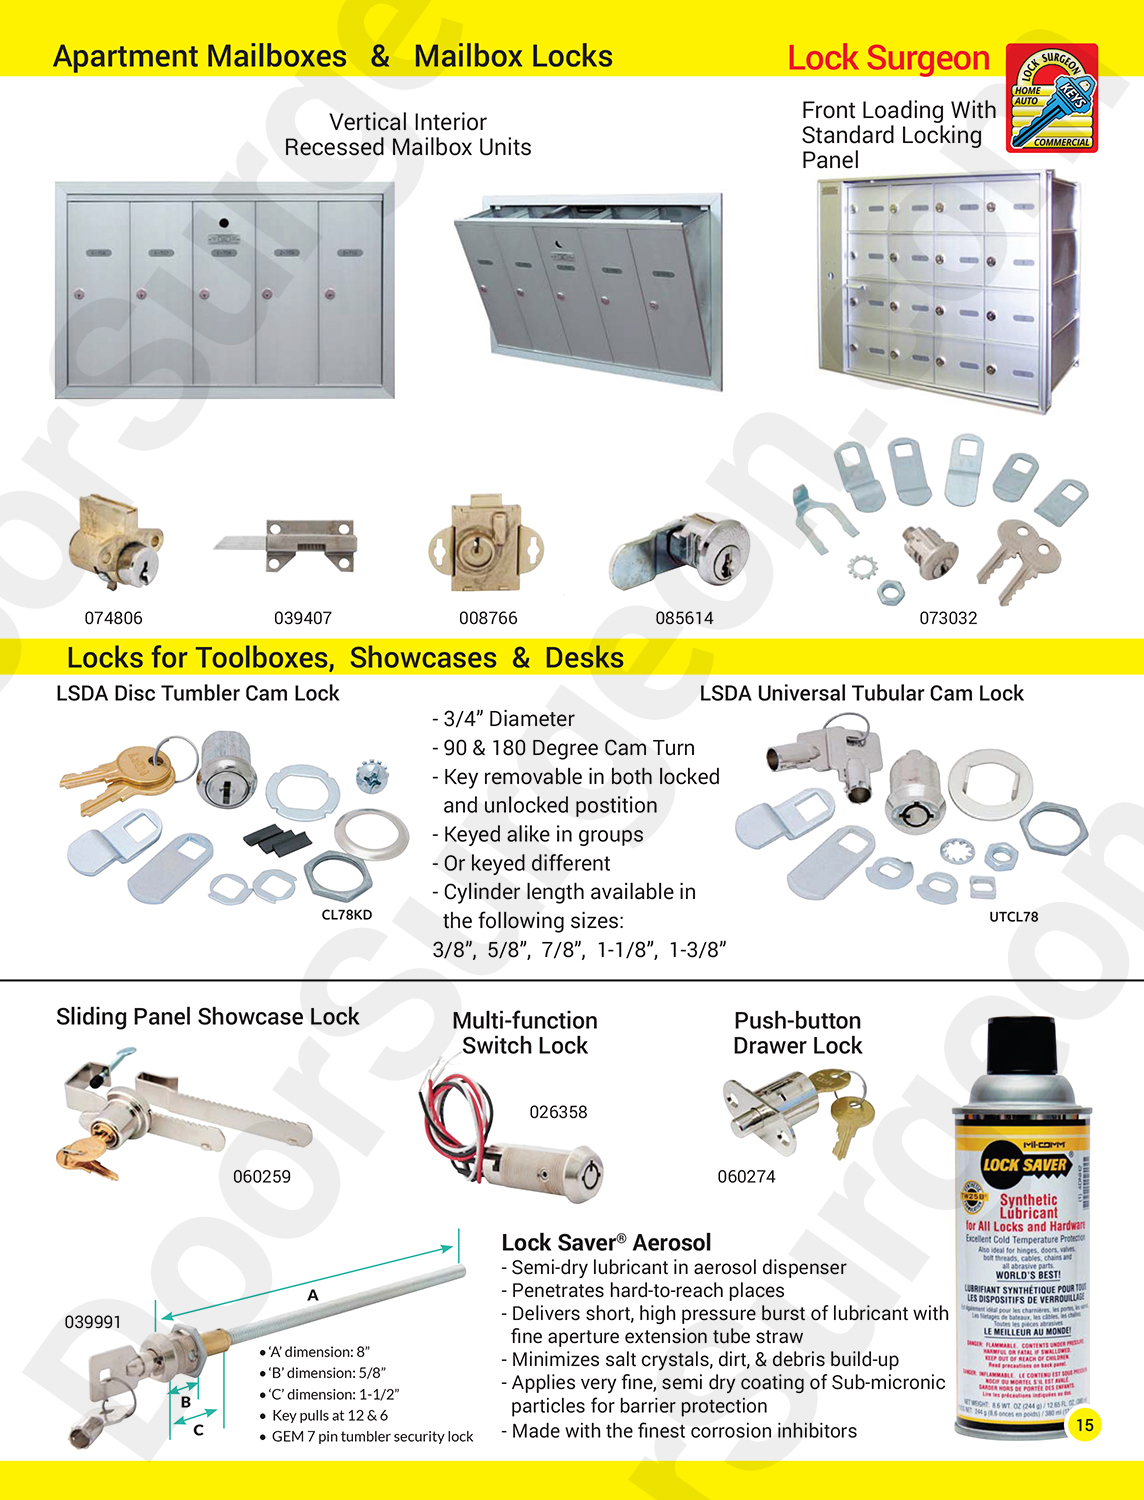 Apartment mailboxes, locks for tool boxes, showcases, desks, sliding panels & pushbutton drawer lock Cochrane